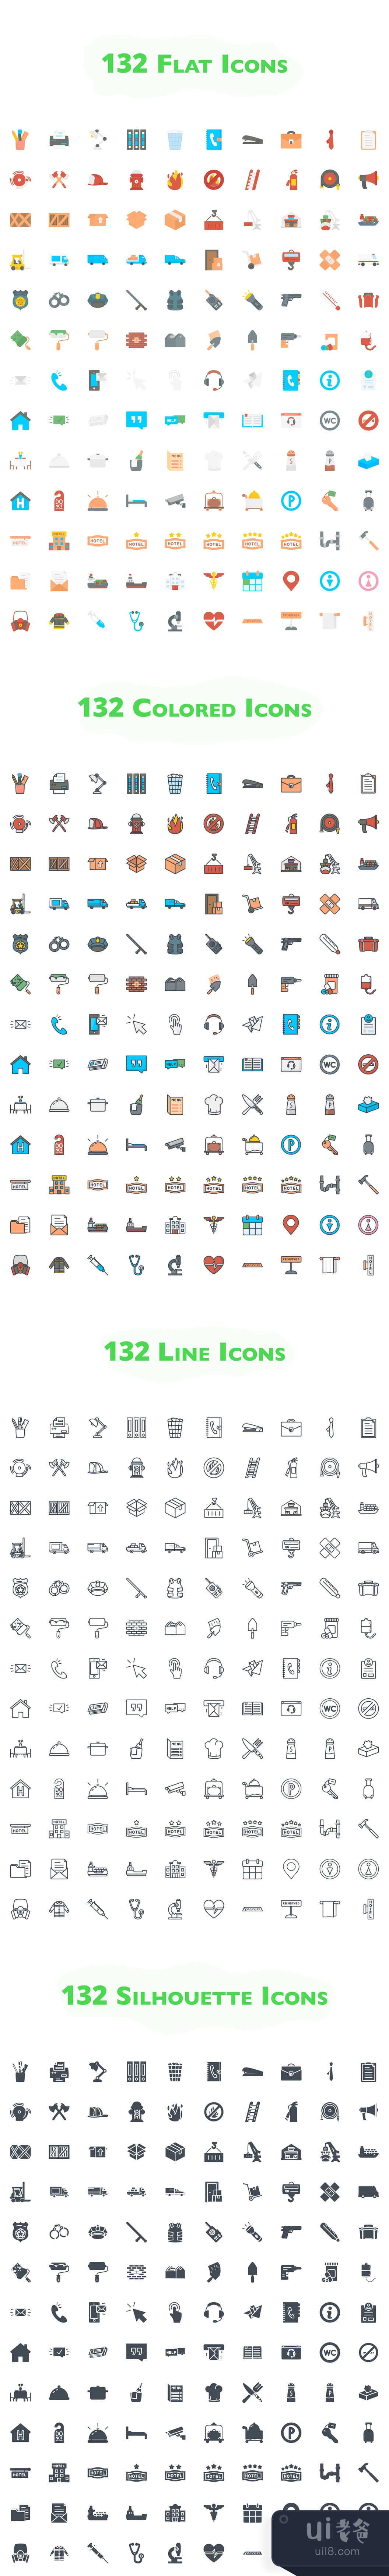 528个服务图标 (528 Service Icons)插图1